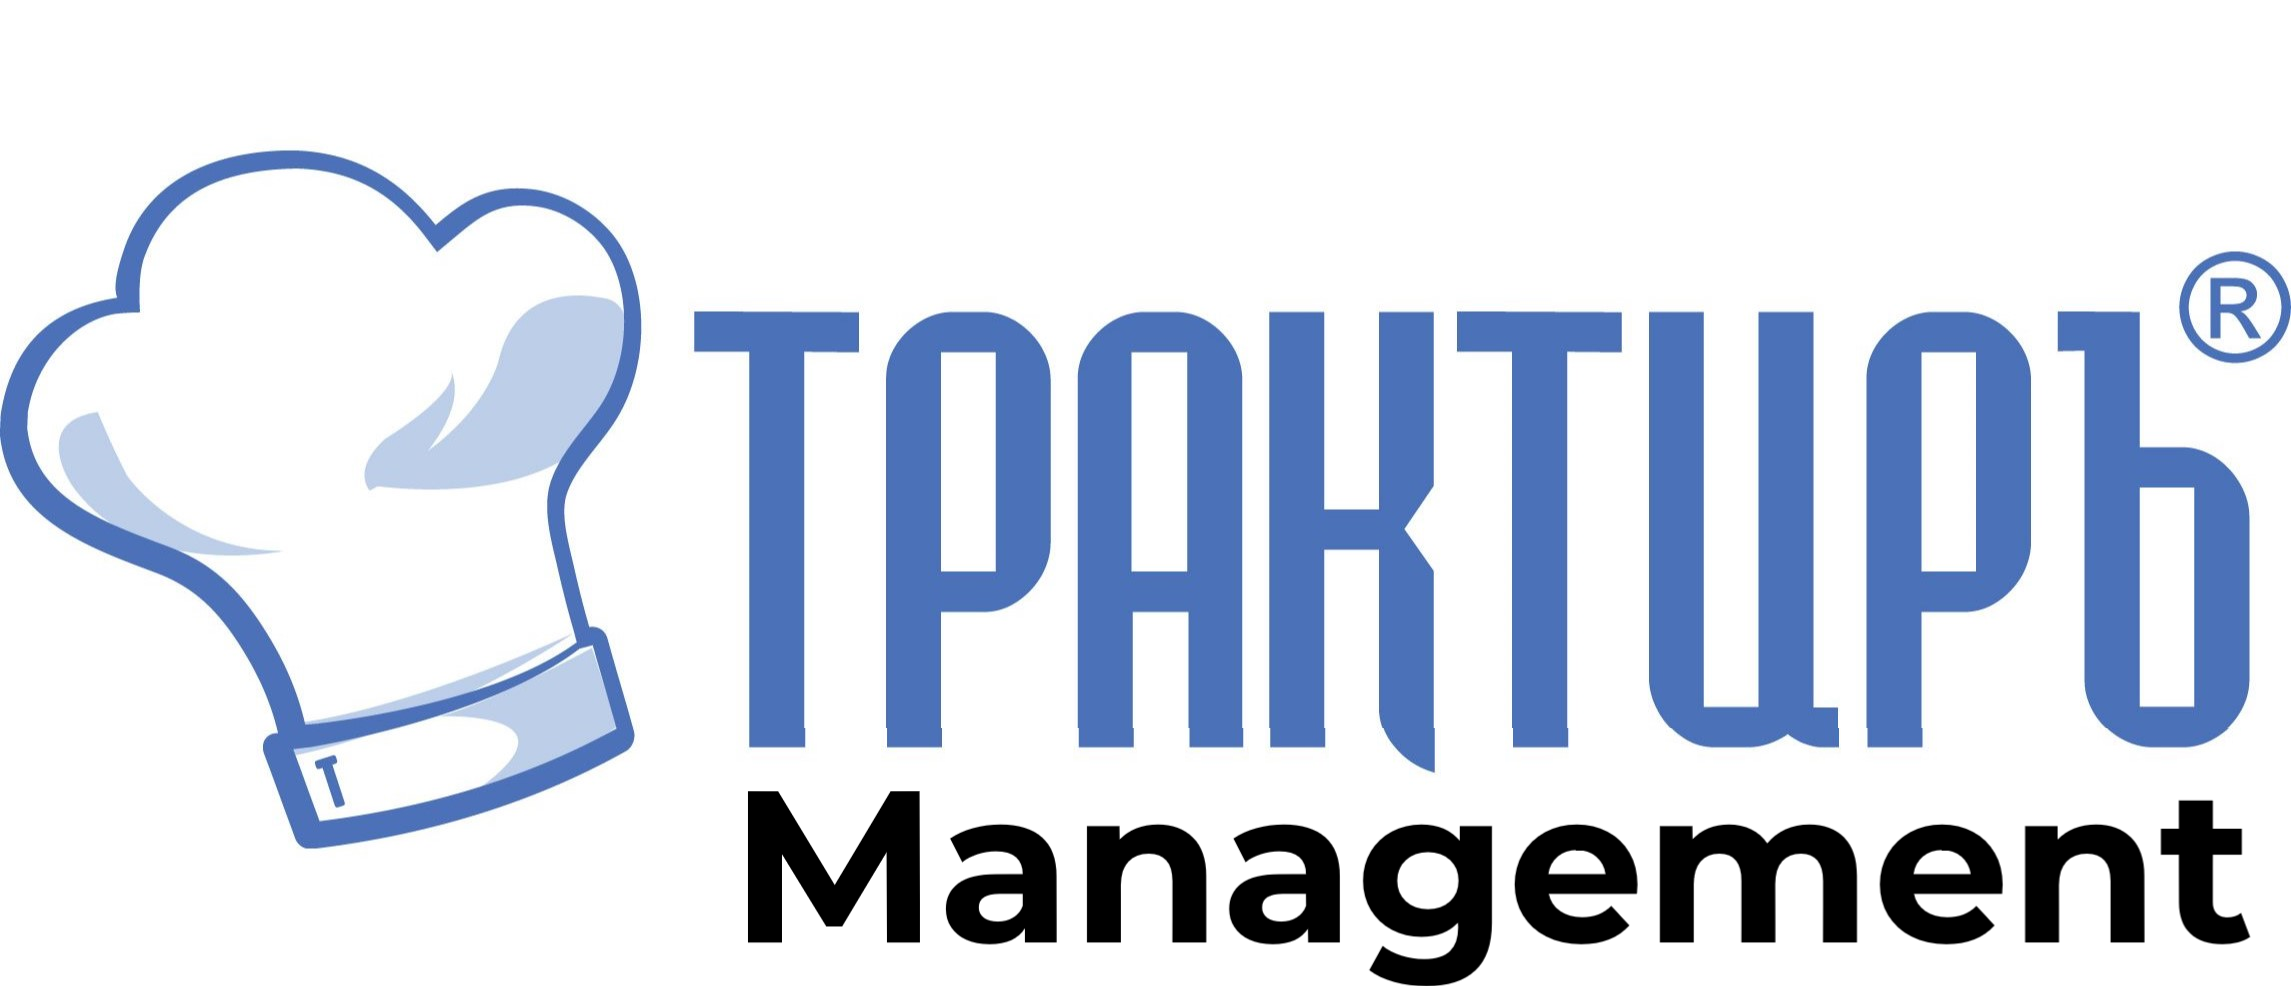 Трактиръ: Management в Рыбинске